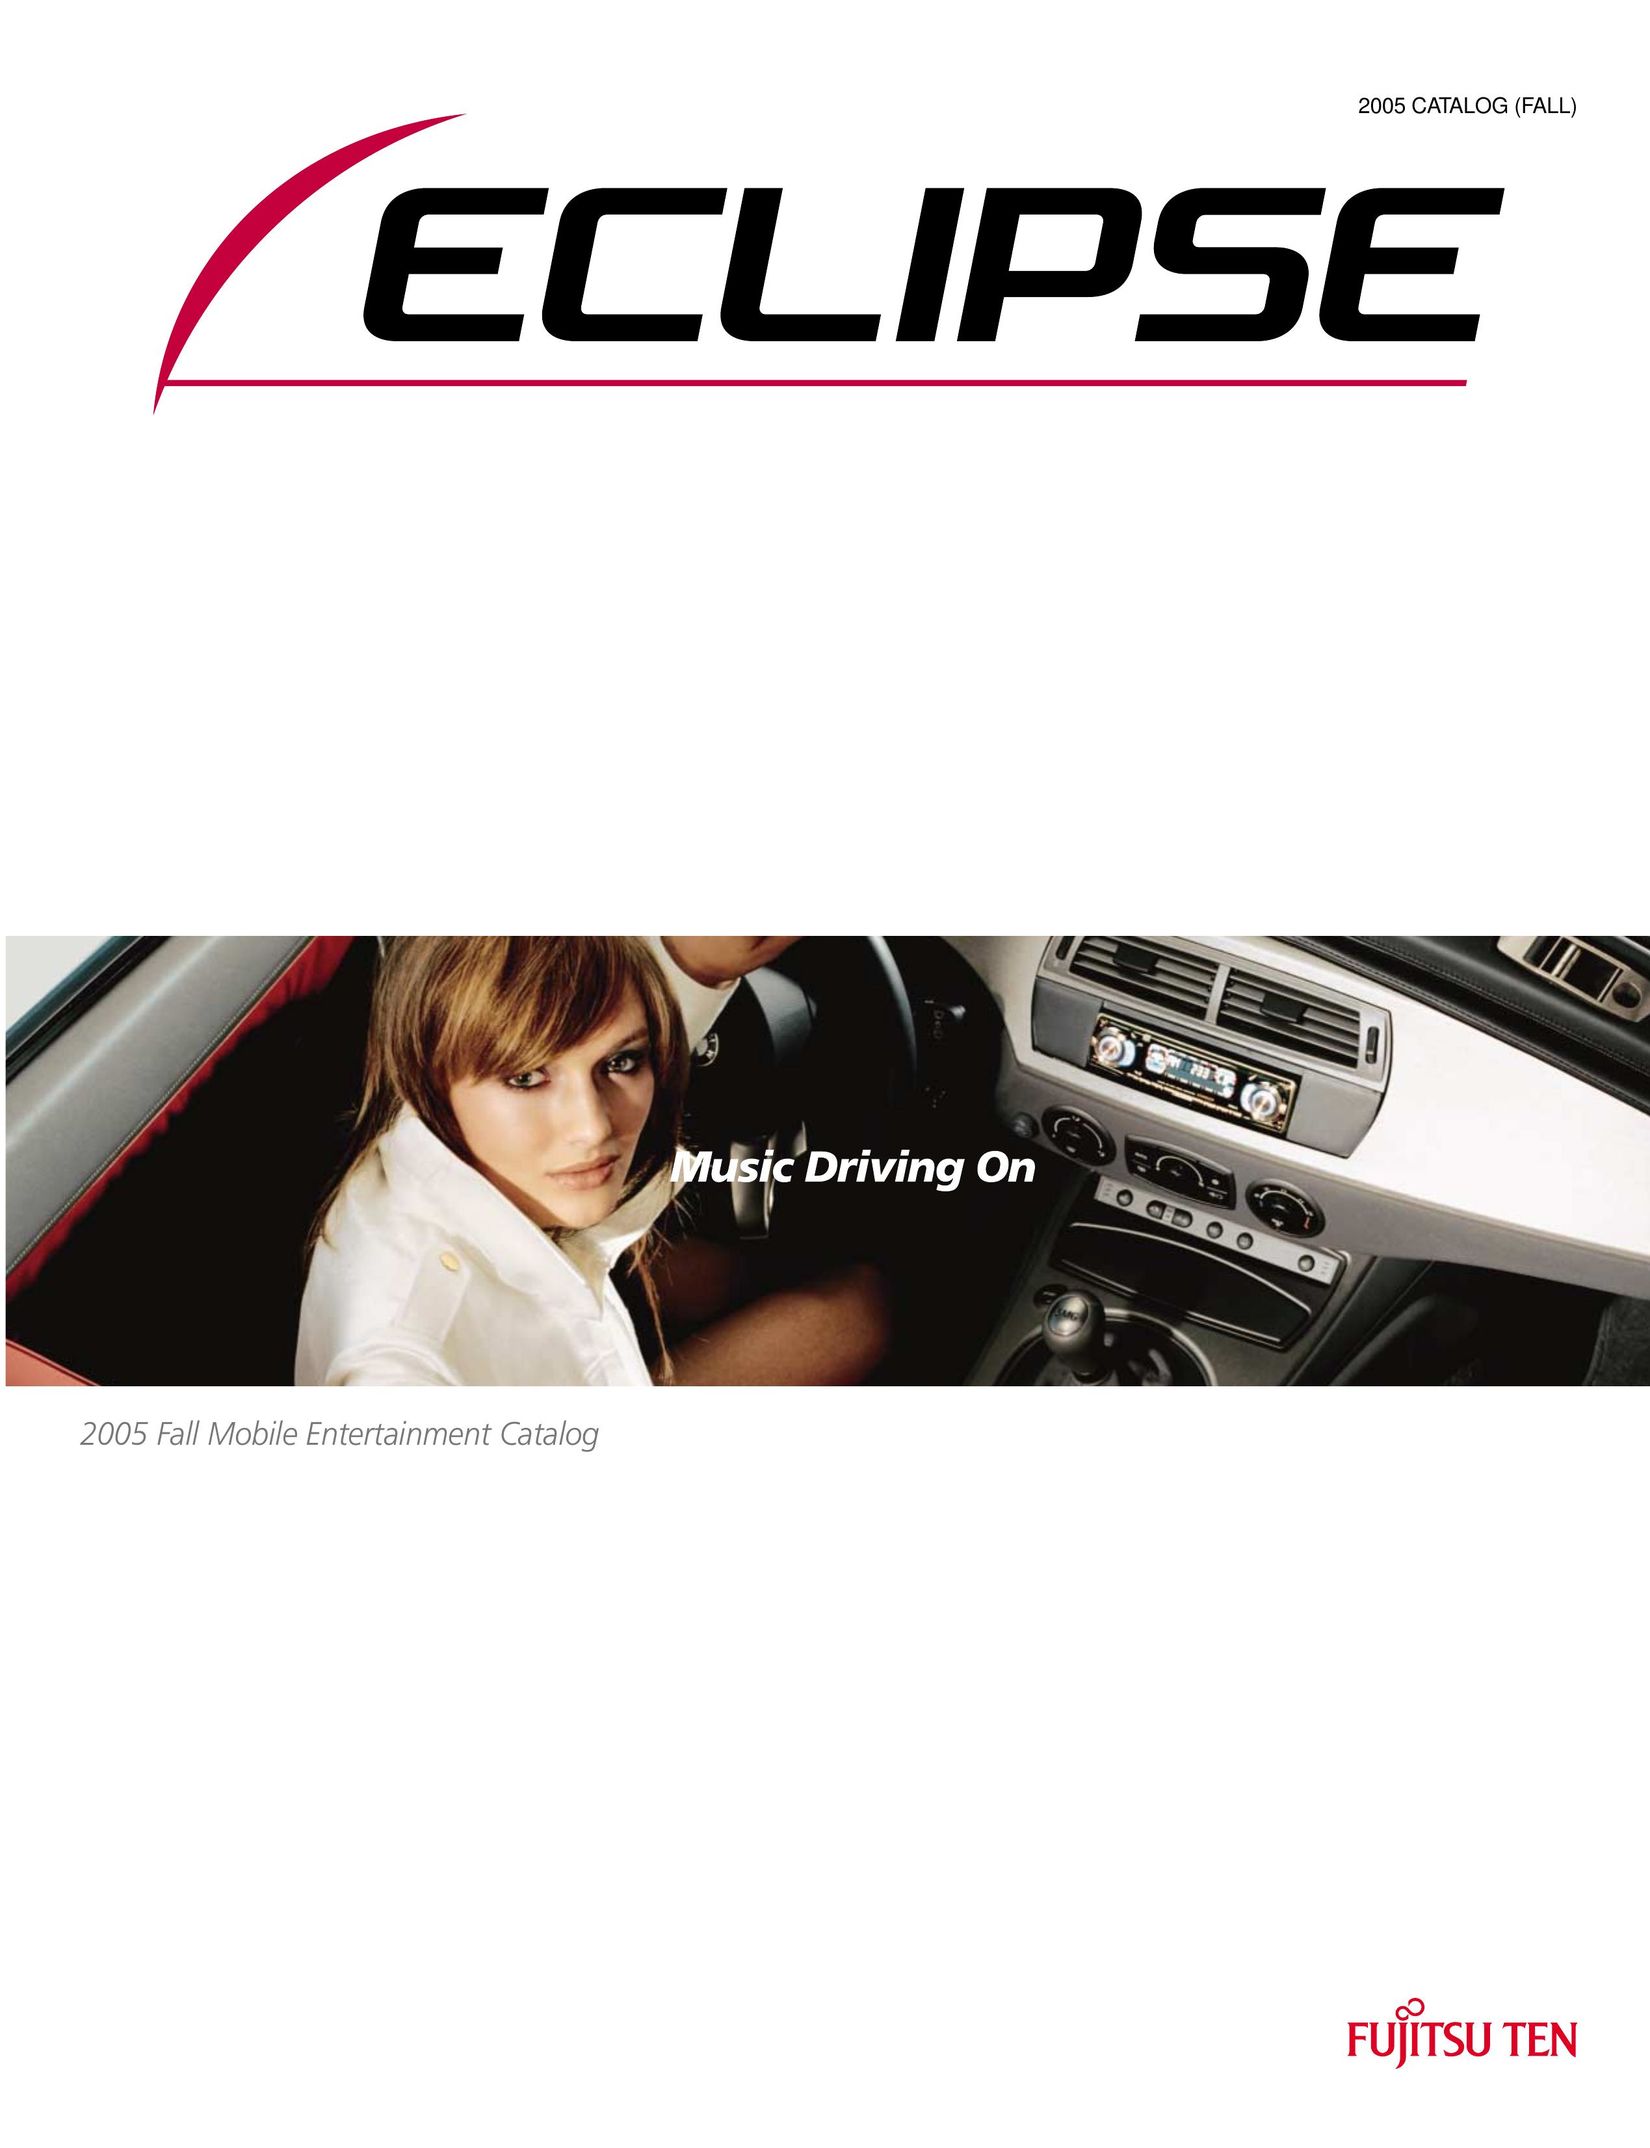 Eclipse - Fujitsu Ten AVN5435 MP3 Player User Manual